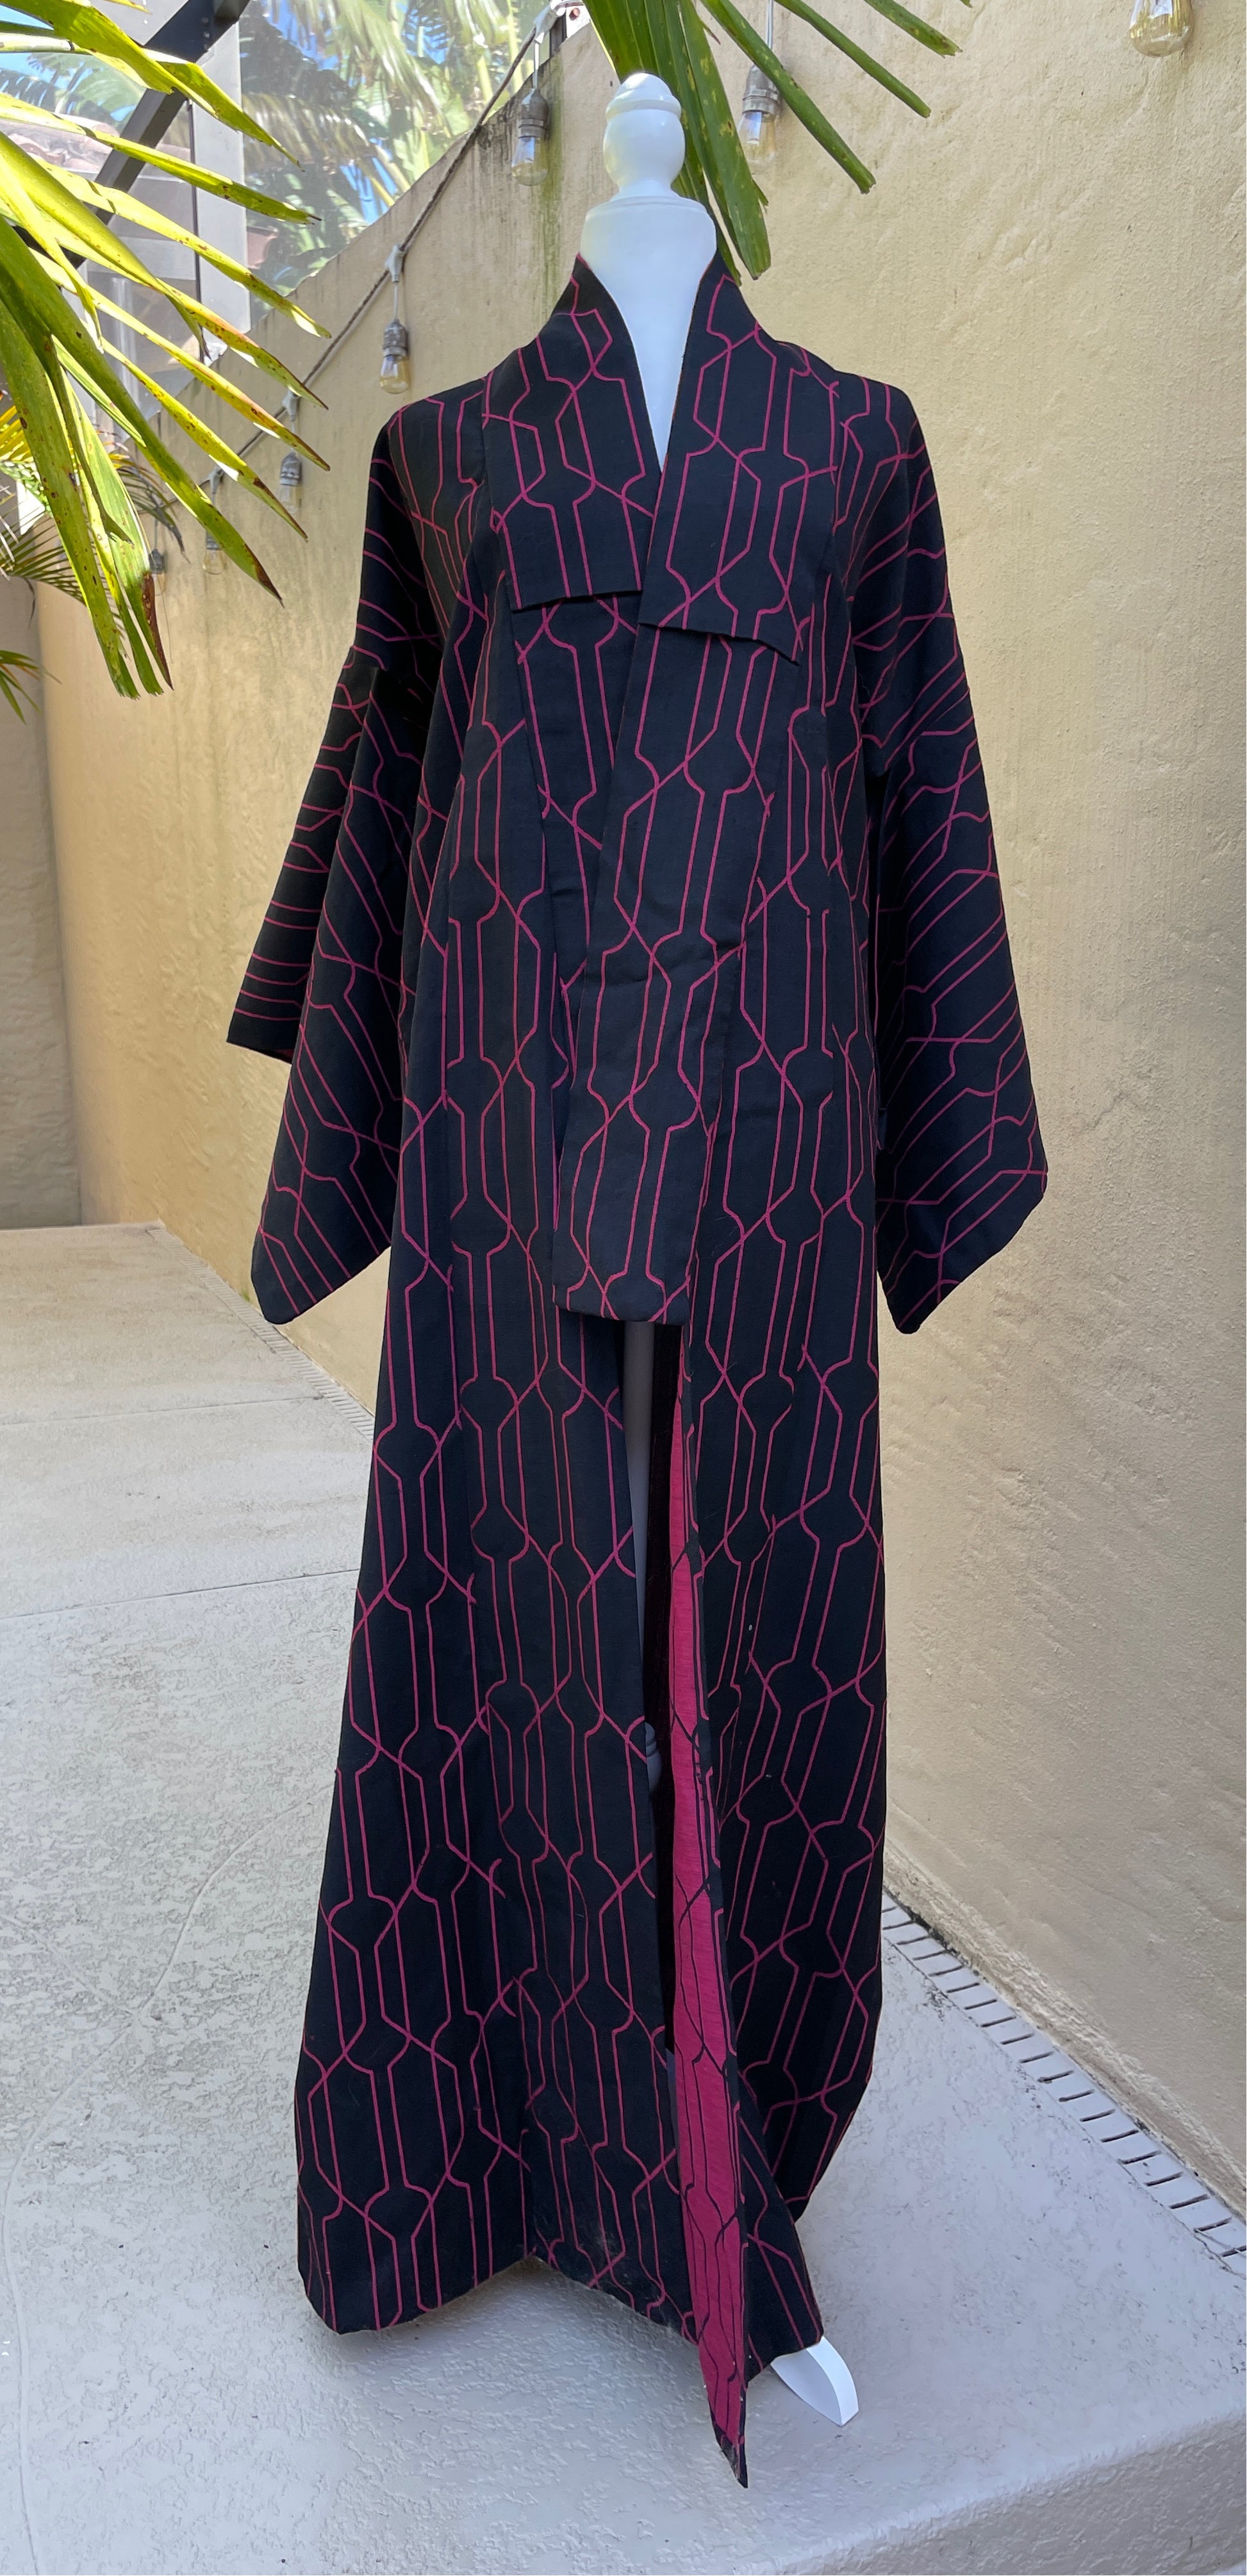 Kimono vintage black handmade lounge robe X/L 80s One of a Kind Kimono Vintage Black Handmade Style Lounge Robe.